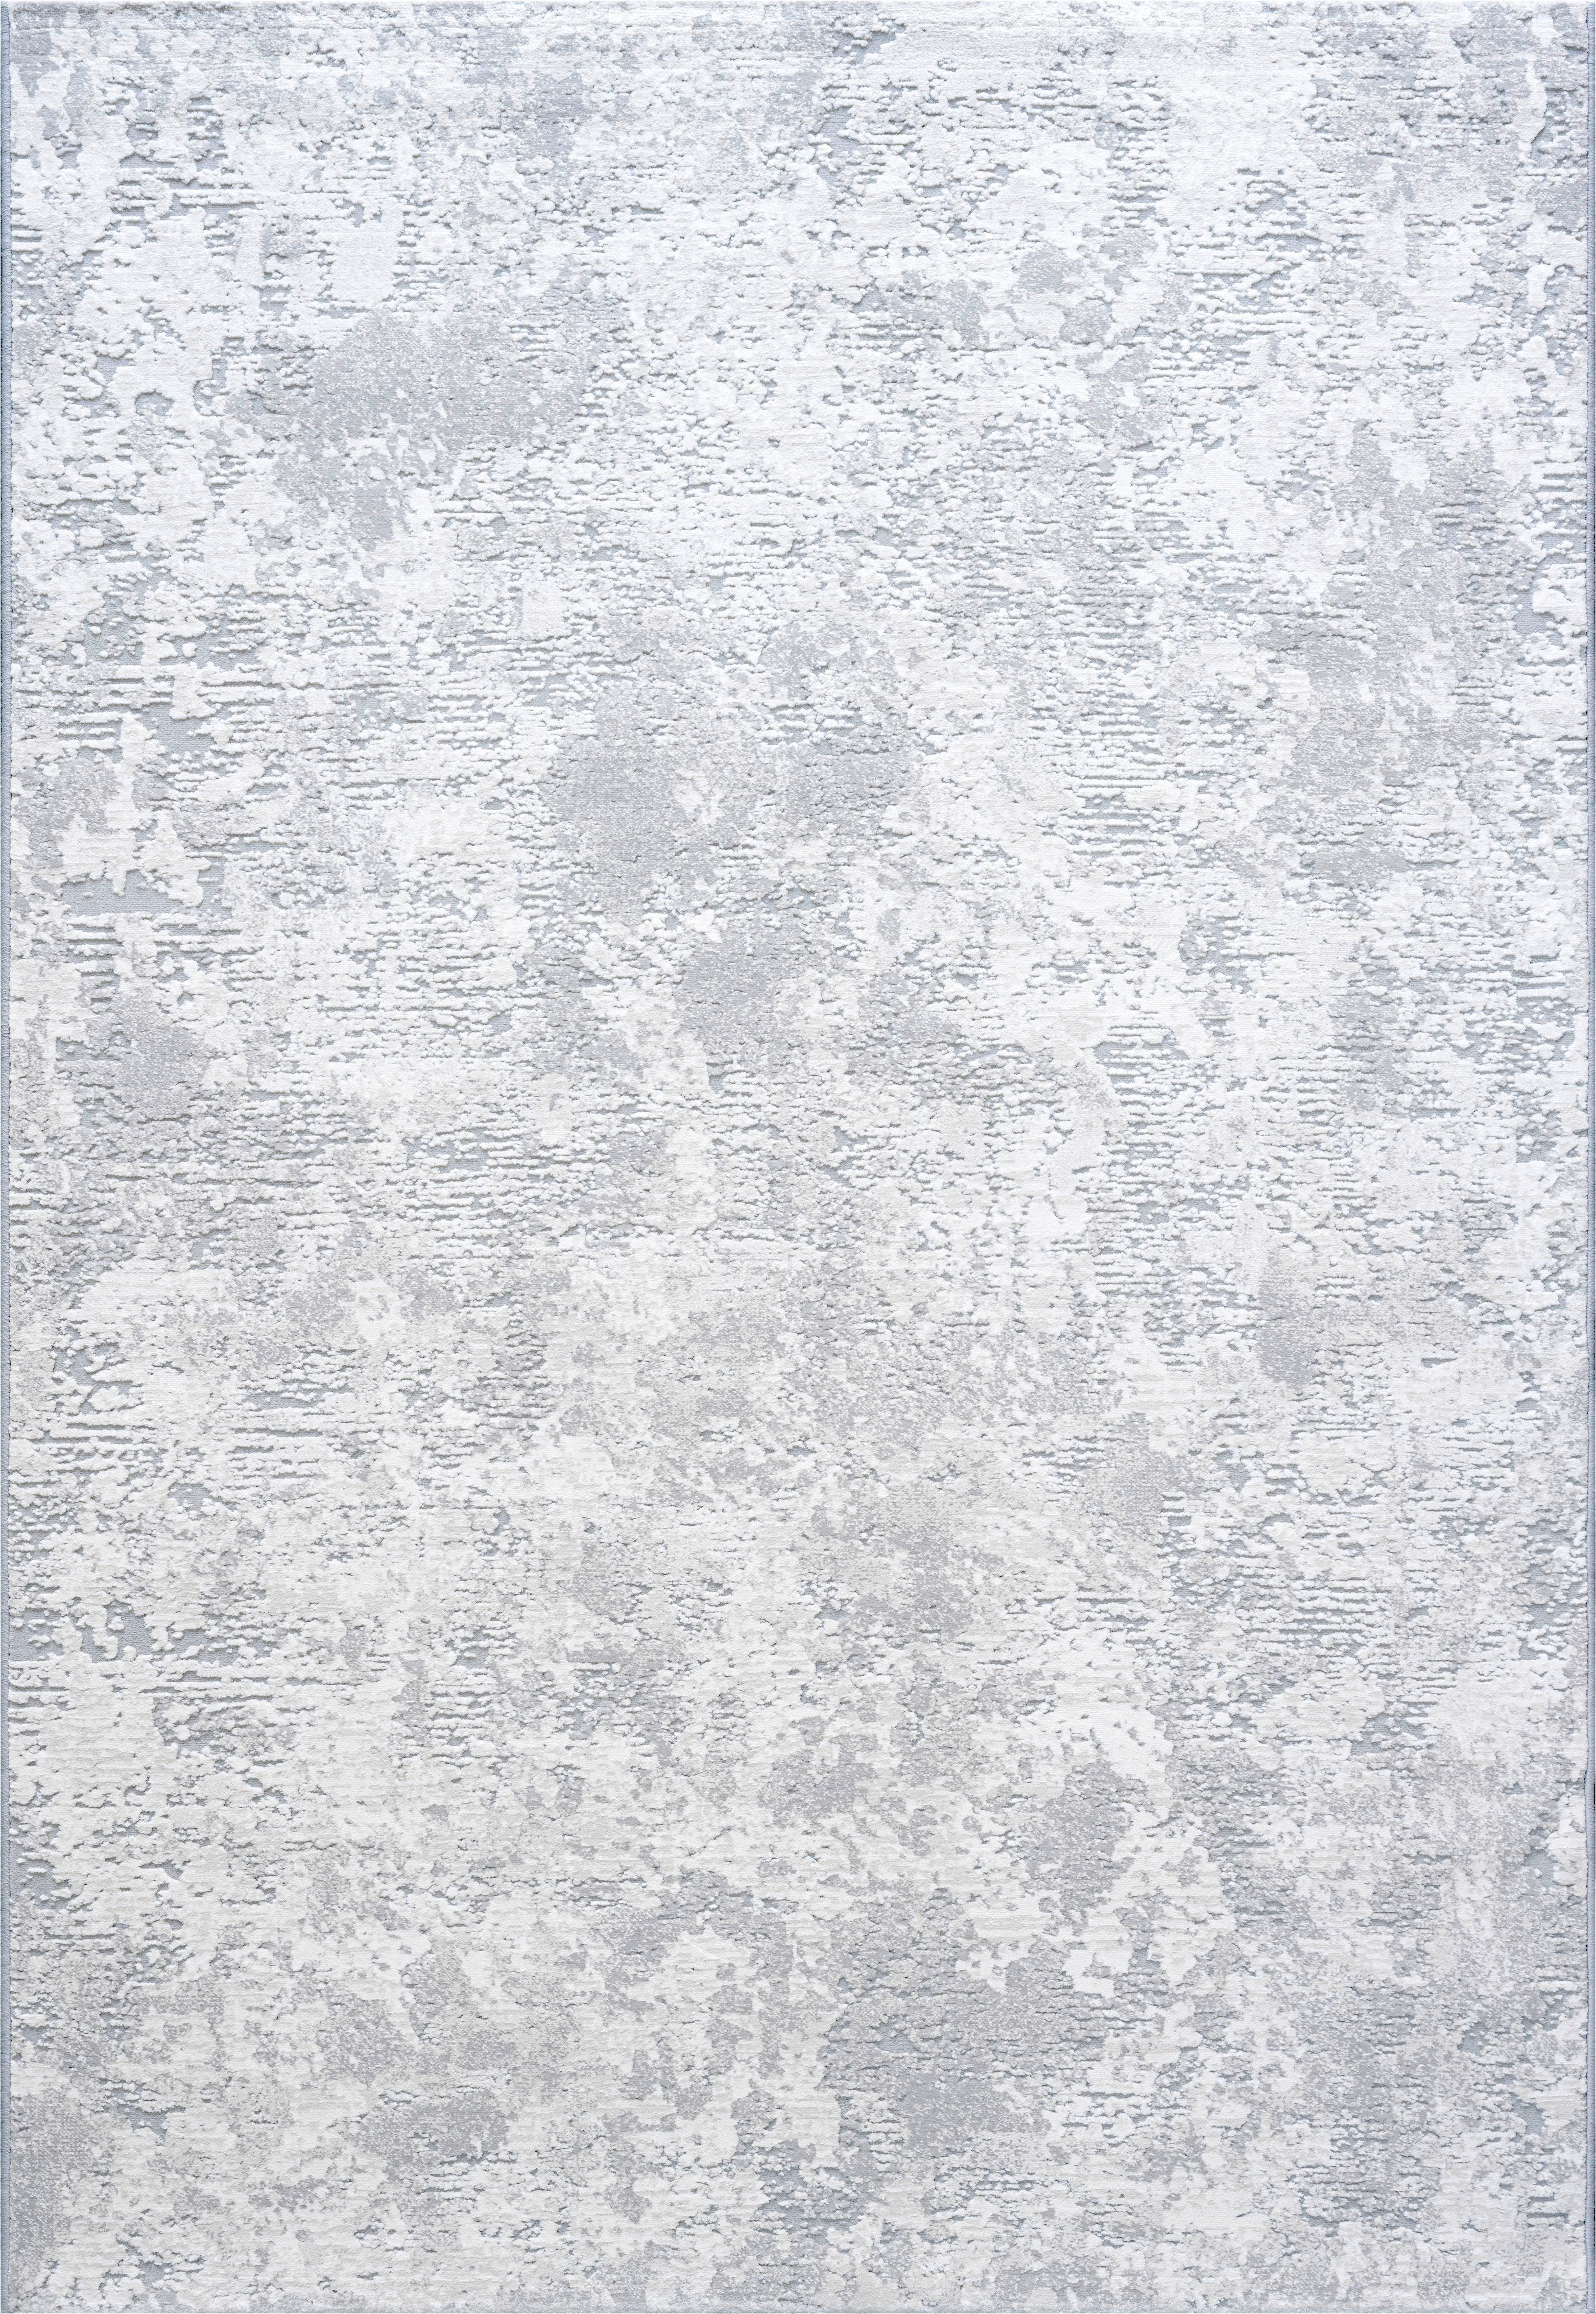 WEBTEPPICH  80/150 cm  Grau, Silberfarben, Hellgrau   - Silberfarben/Hellgrau, Design, Textil (80/150cm) - Novel